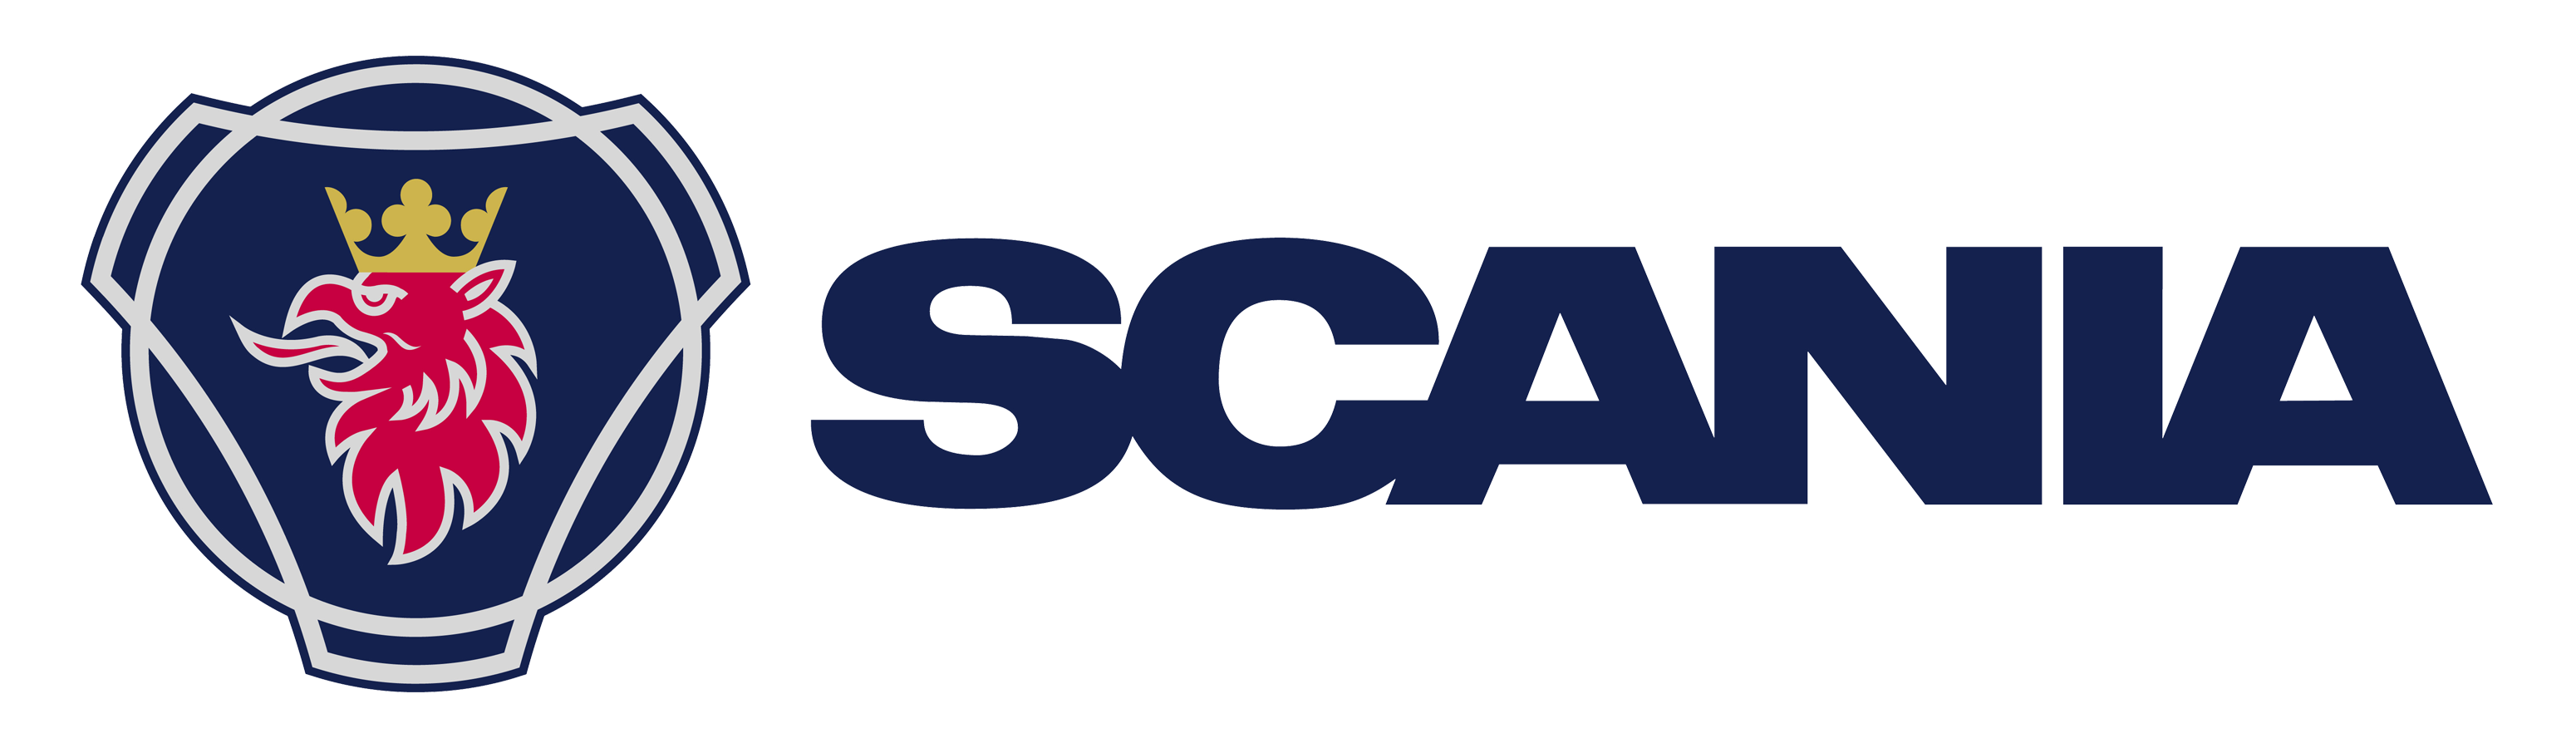 Image result for scania logo